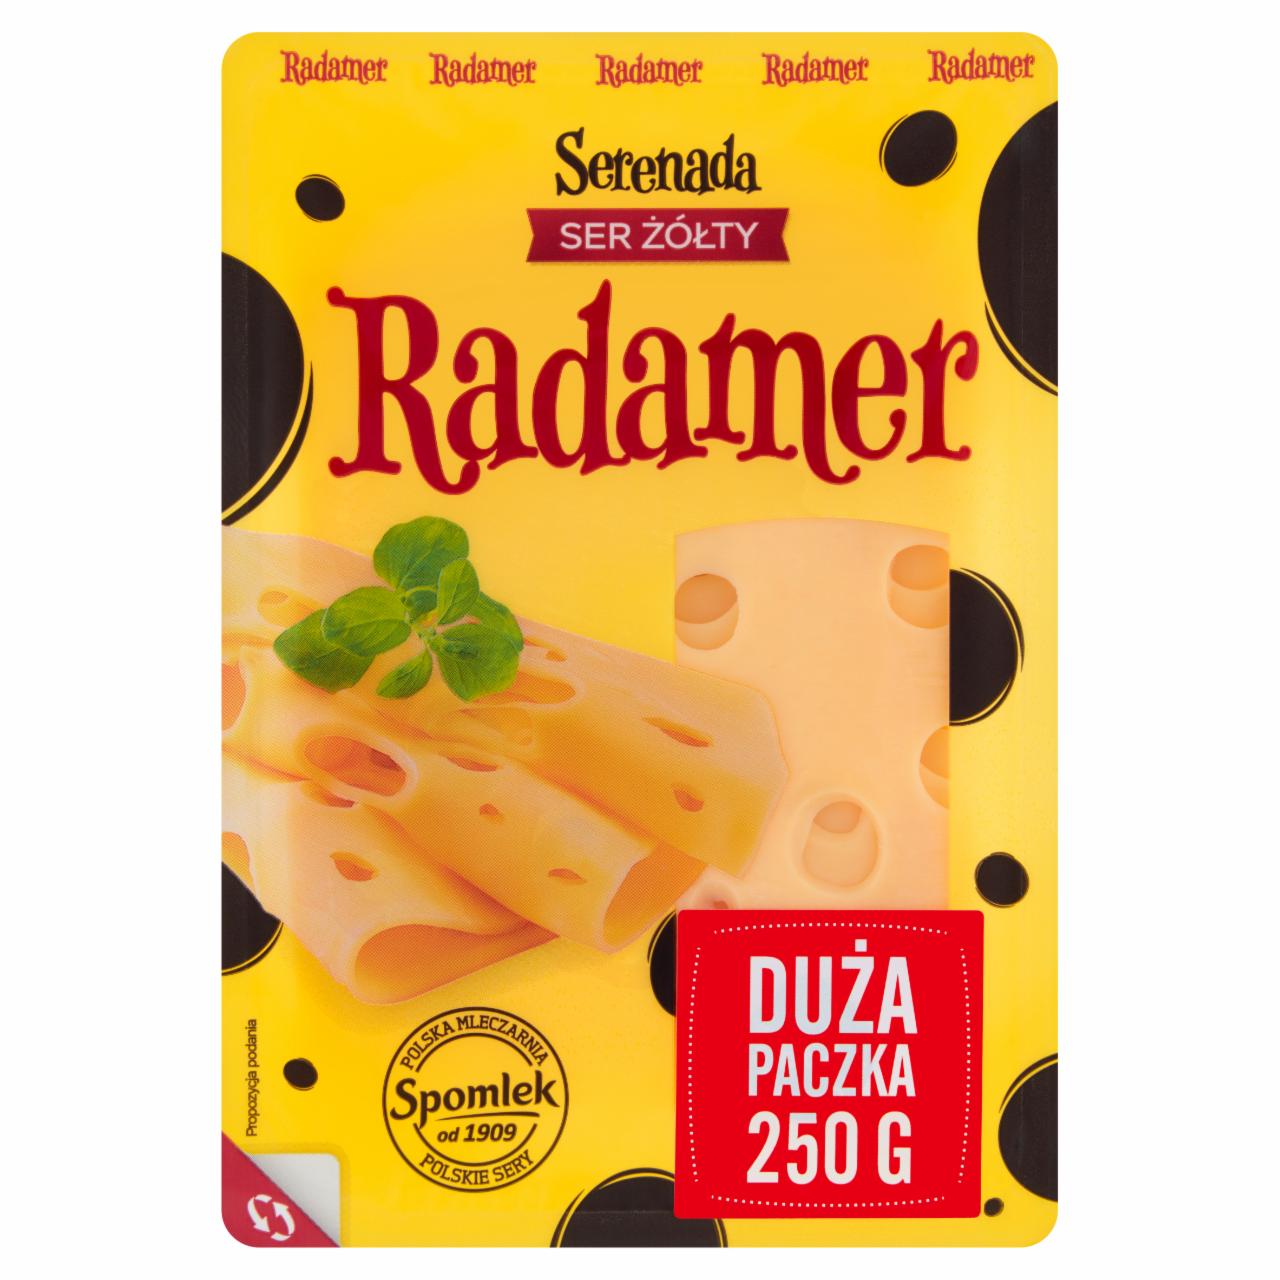 Zdjęcia - Serenada Ser żółty Radamer 250 g